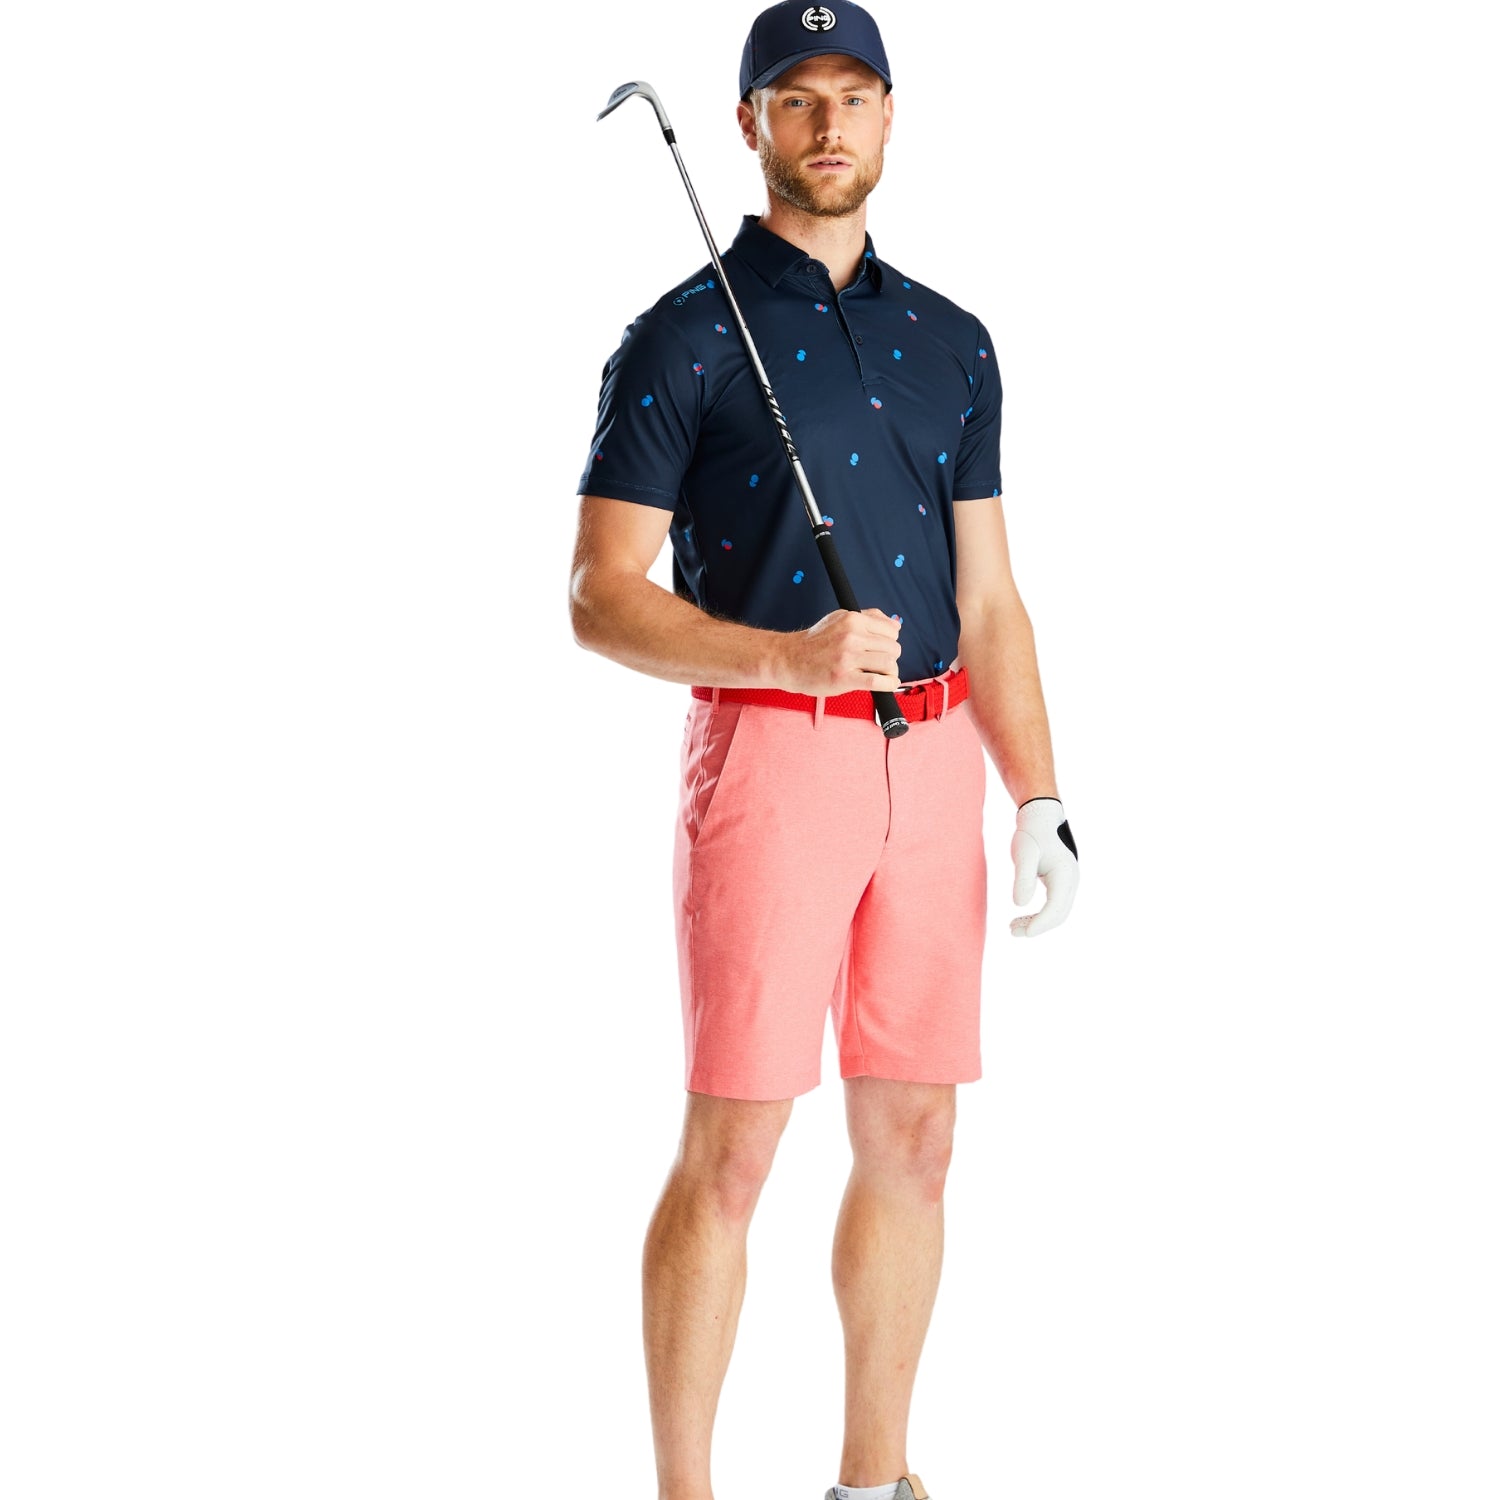 Ping Two Tone Mens Golf Polo Shirt